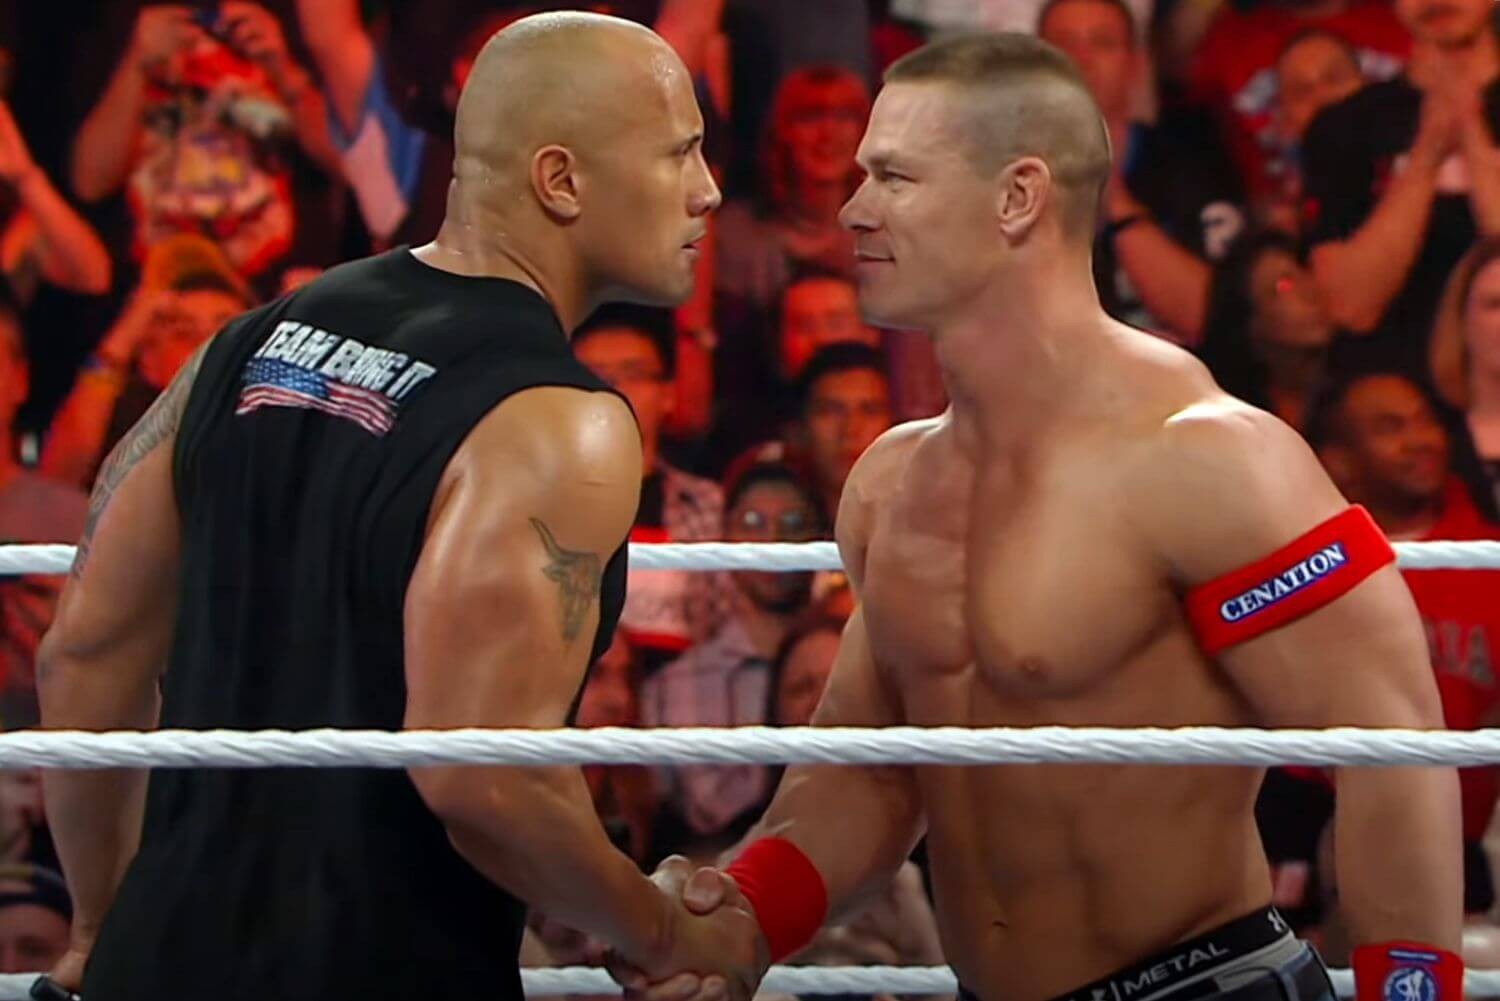 John Cena and Dwayne Johnson